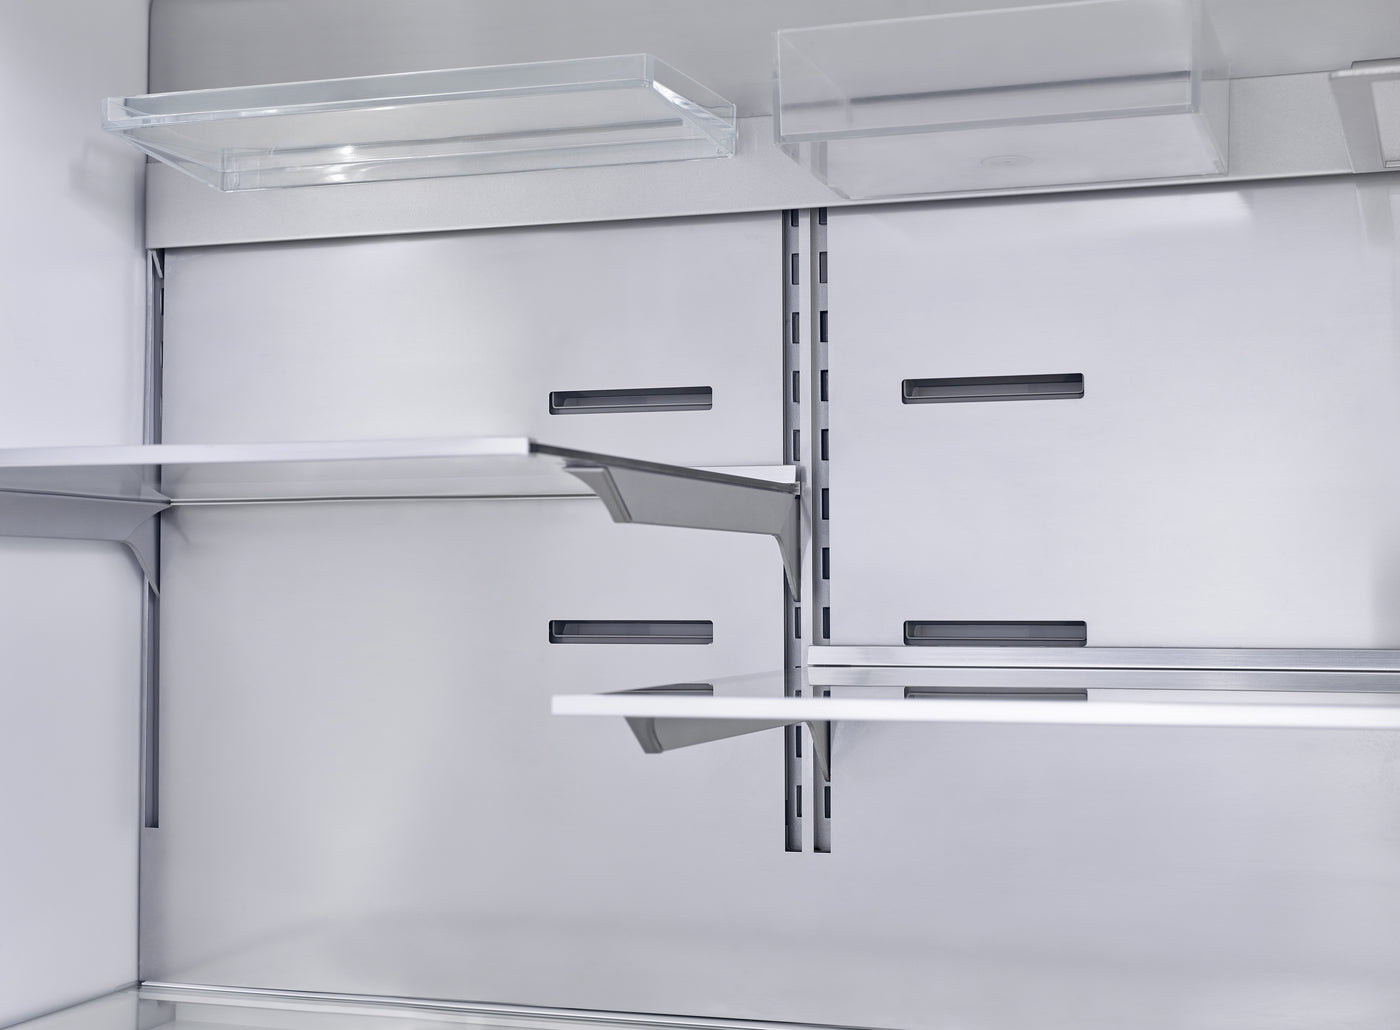 Bosch 800 Series Stainless Steel Counter-Depth 4 Door Refrigerator Rececssed Handle - (B36CL80ENS)